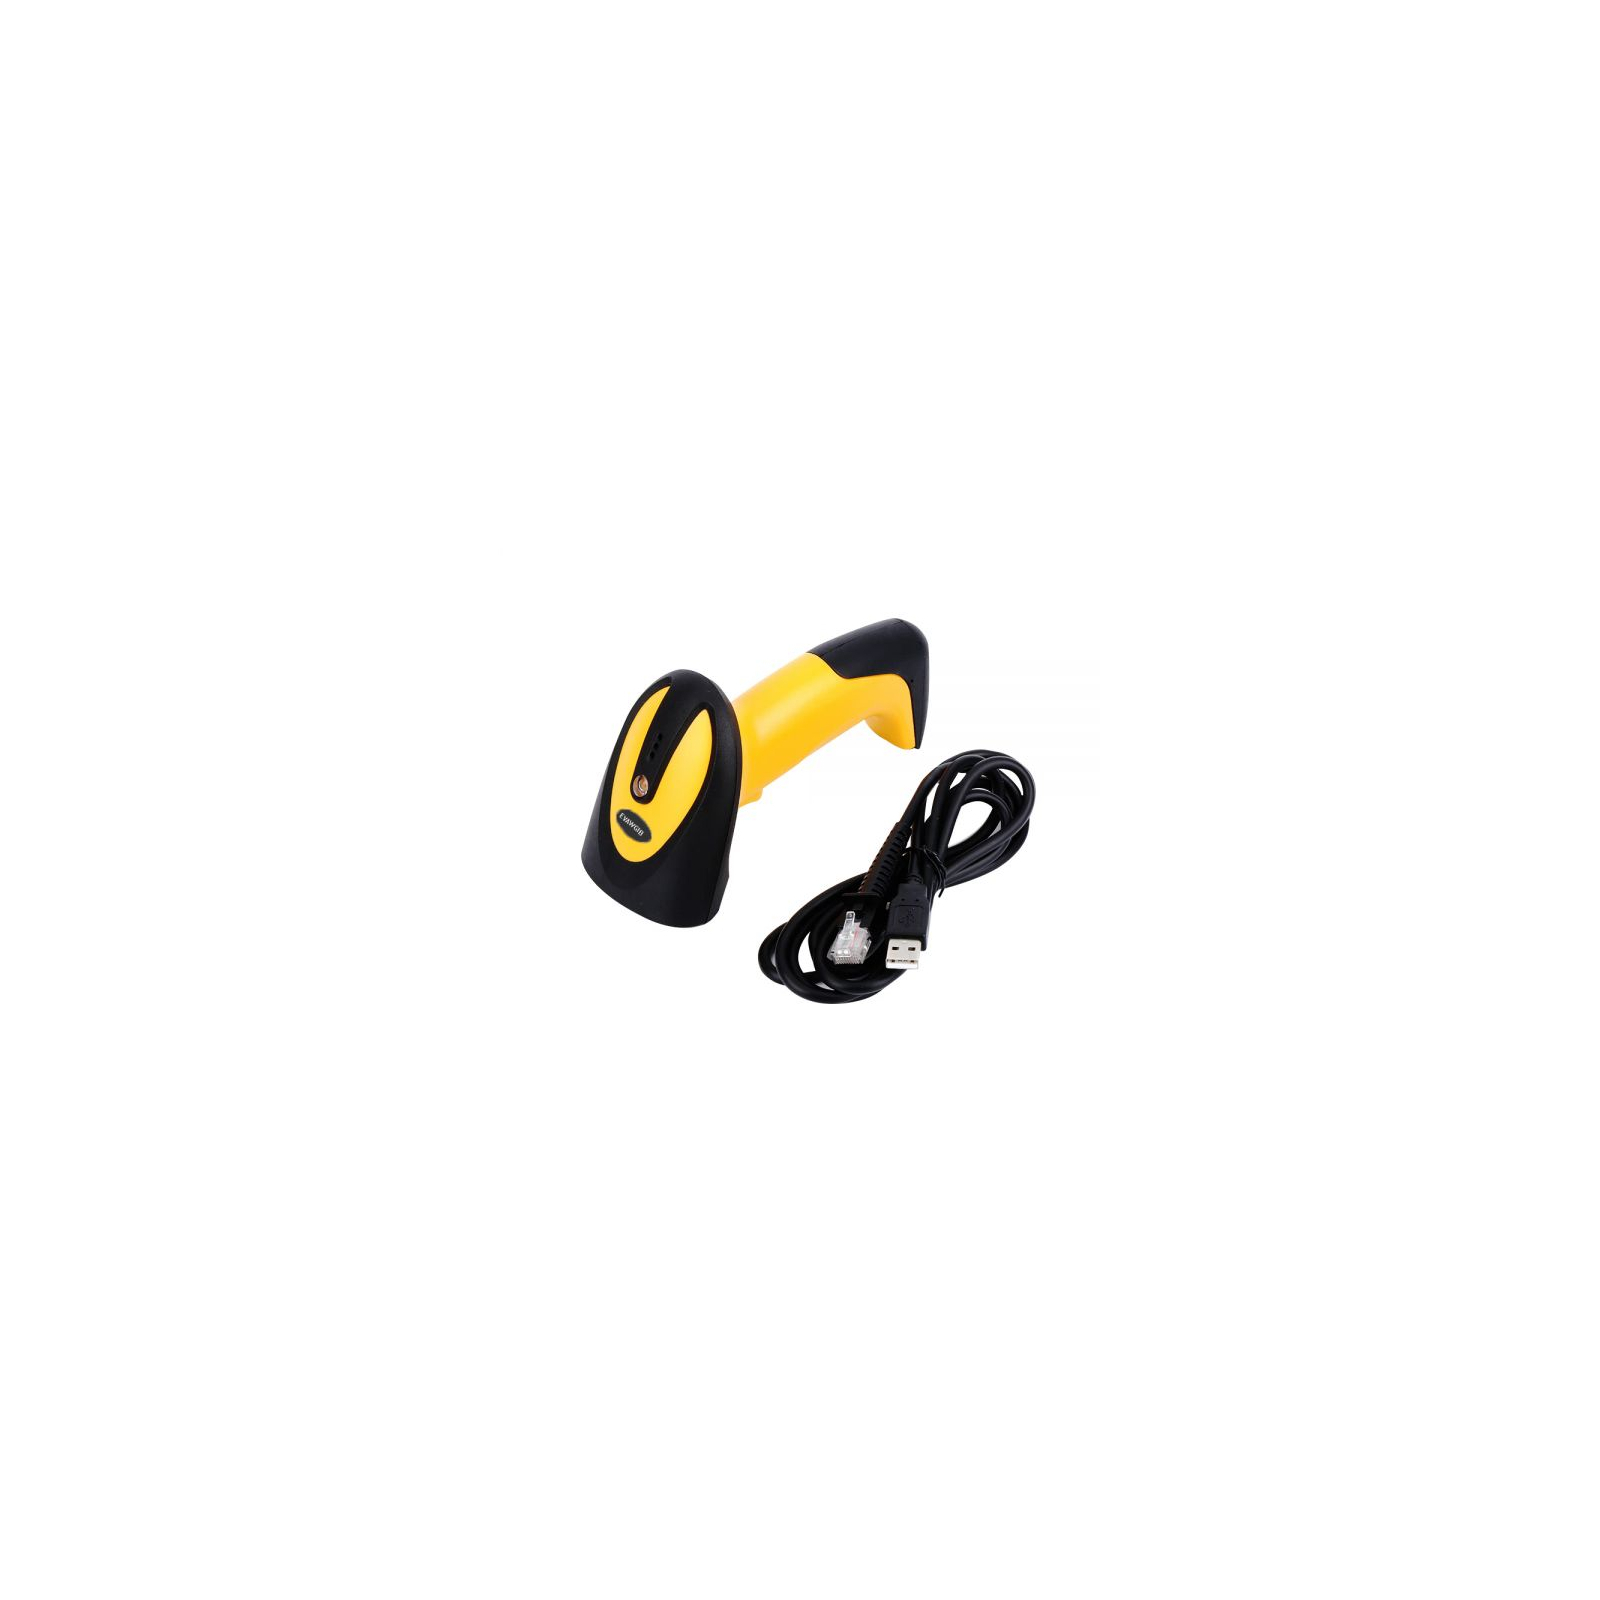 Сканер штрих-кода UKRMARK EV-W2503 2D, 433MHz, USB, IP64, stand, black/yellow (900769) изображение 6